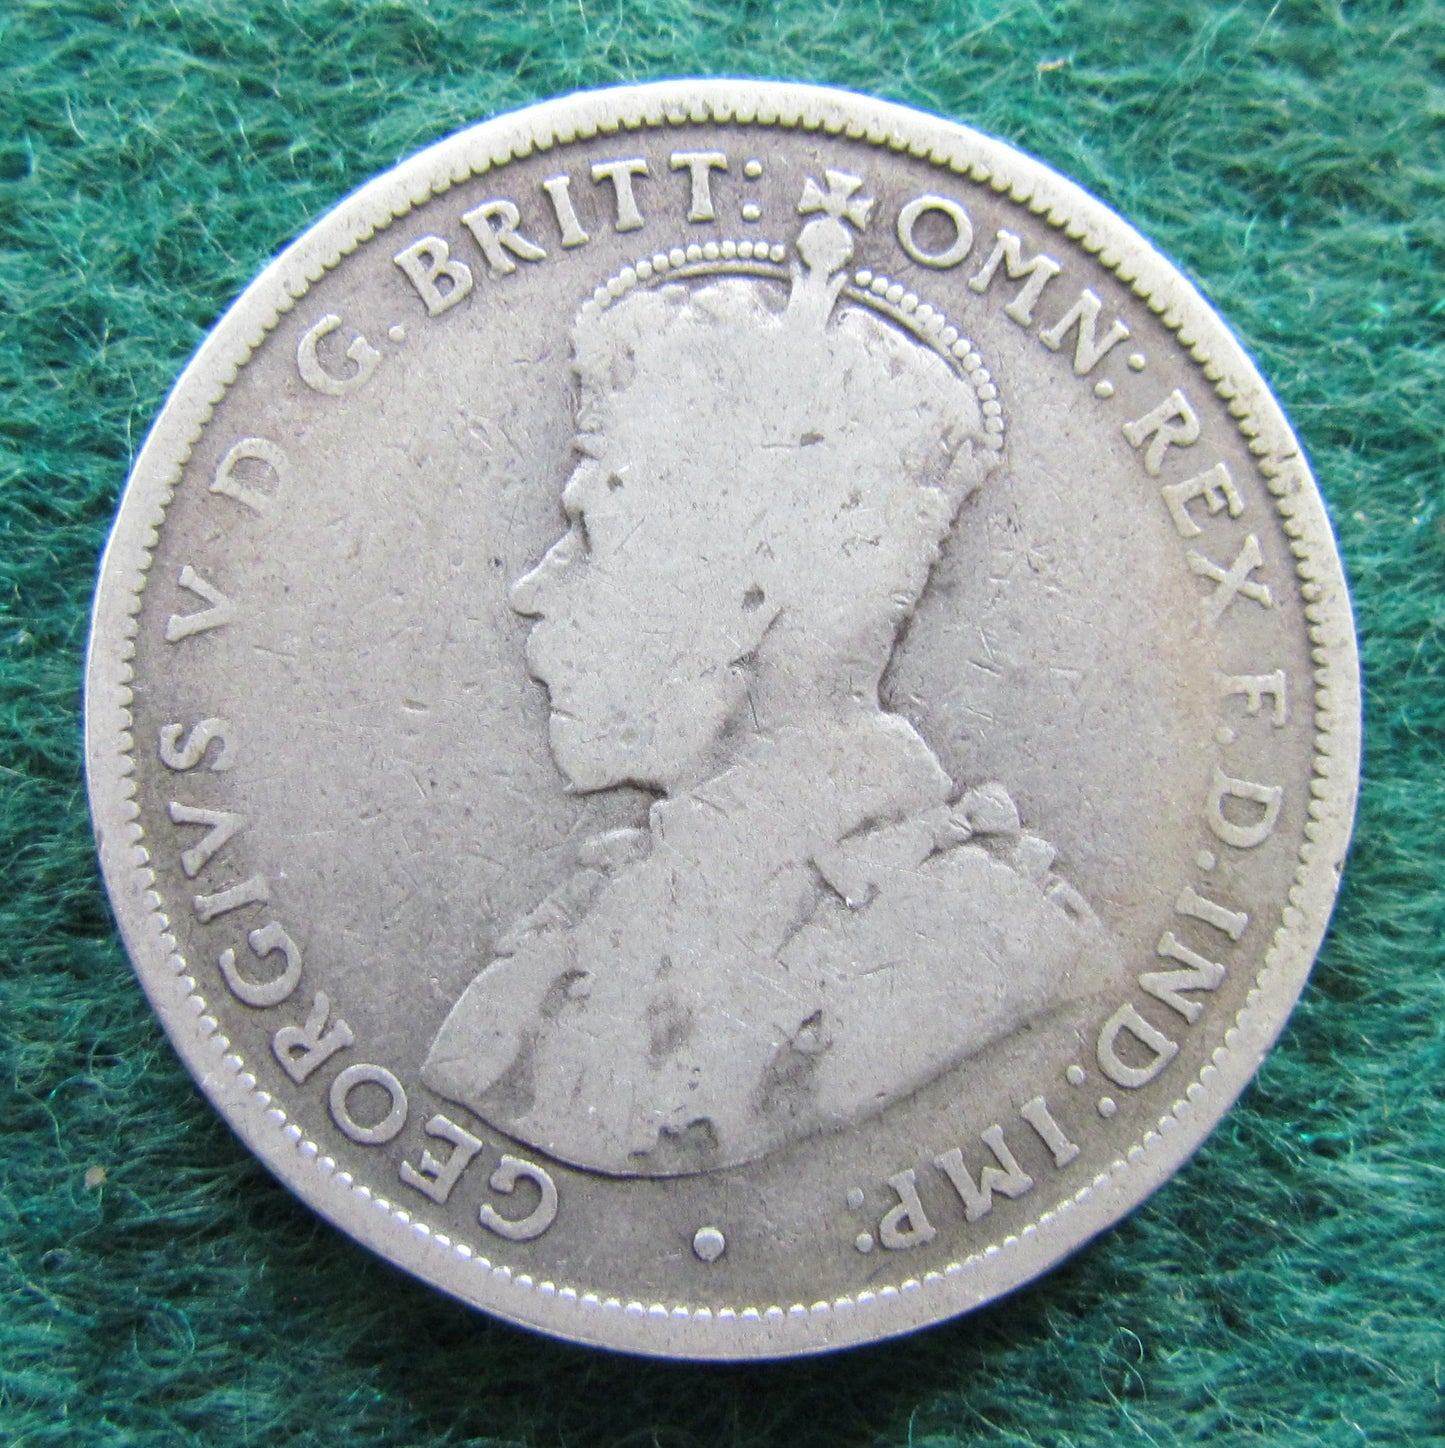 Australian 1911 2/- Florin King George V Coin - Circulated